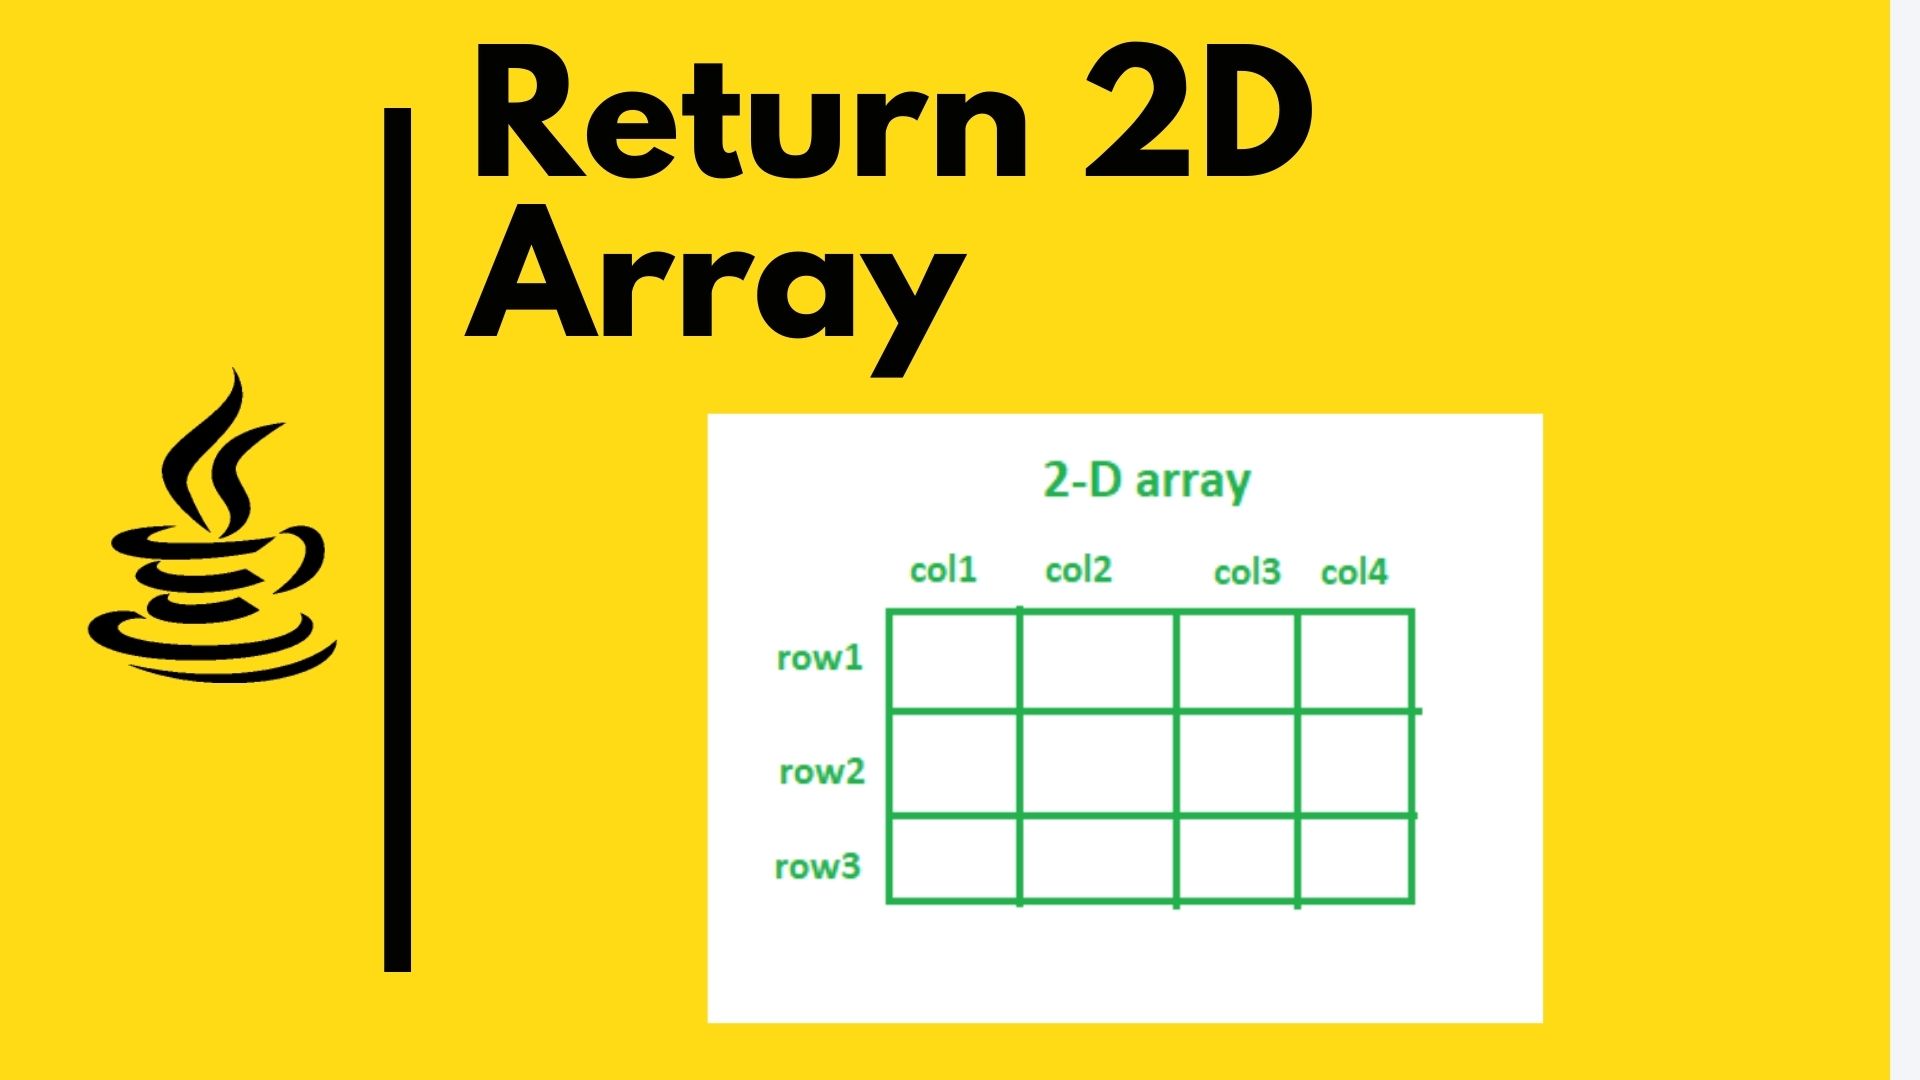 Return a 2D array from a method